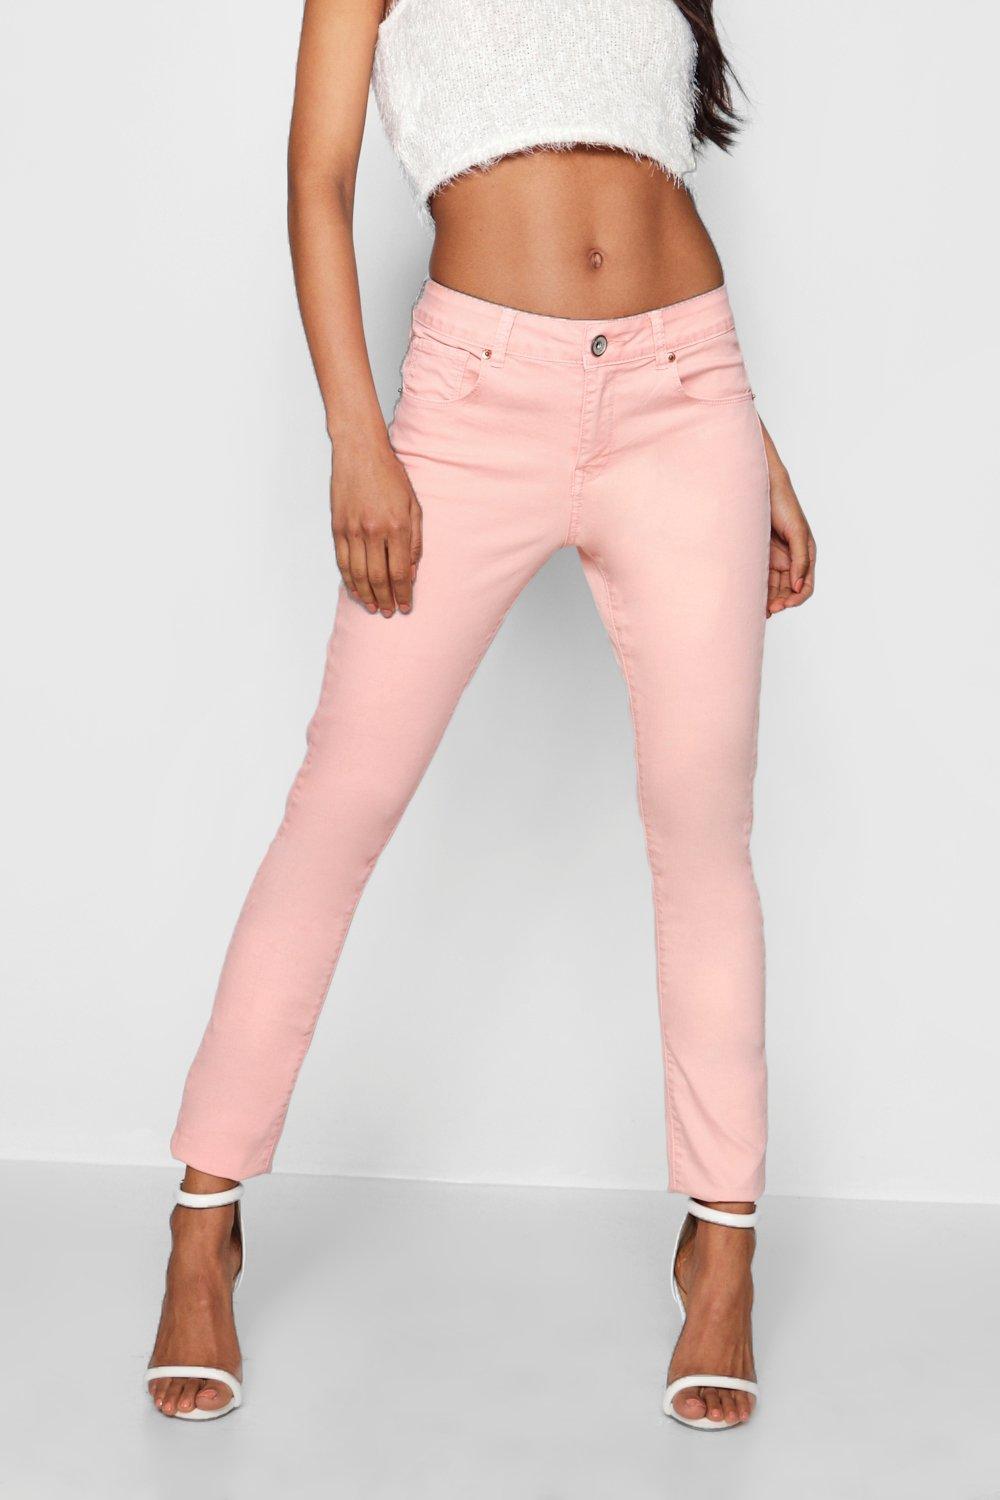 pink skinny jeans